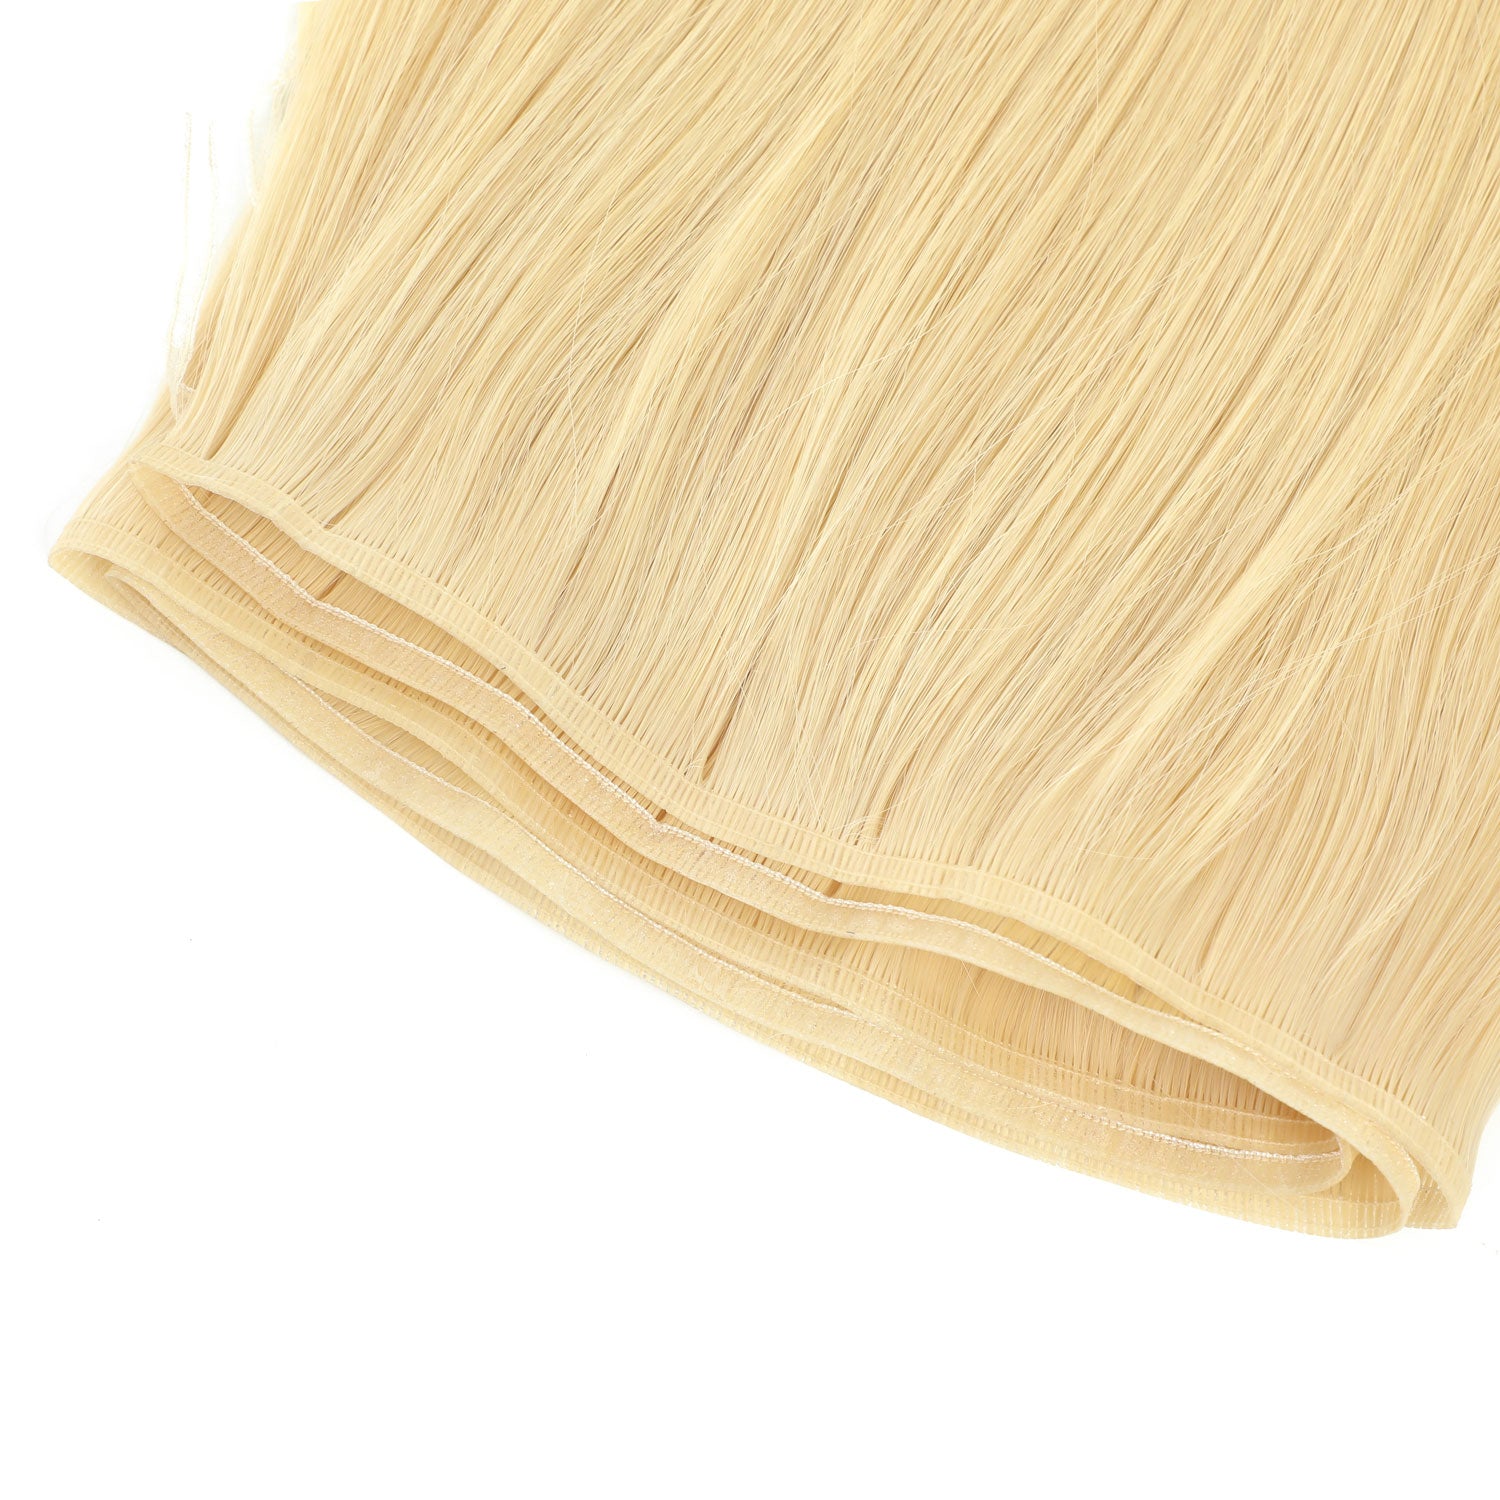 Flat Weft Hair Extensions - #24 Medium Sandy Blonde 22"